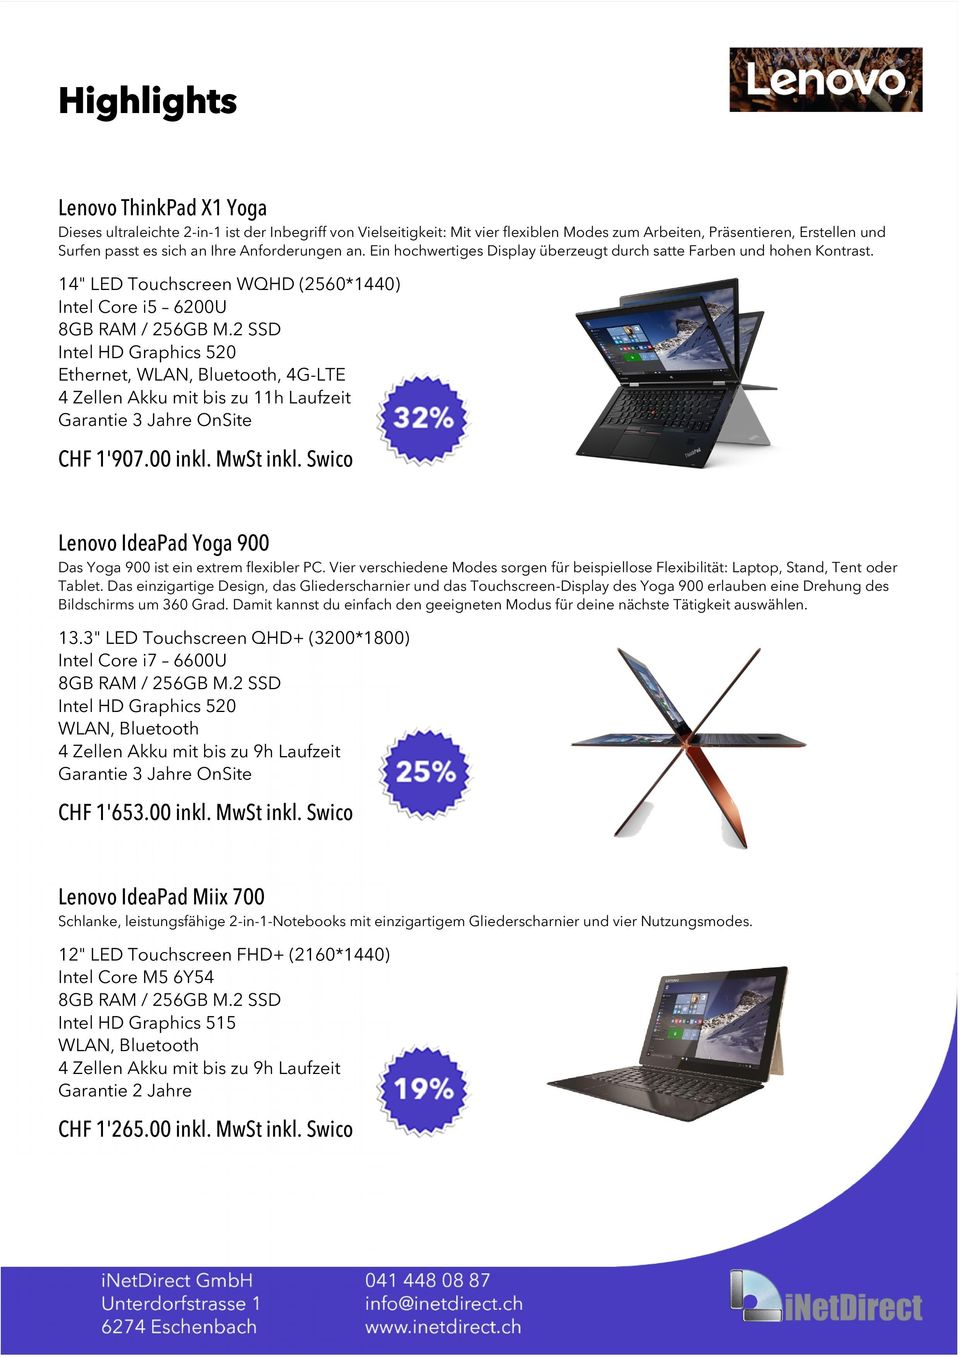 Swco Lenovo IdeaPad Yoga 900 Da Yoga 900 en exem flexble PC. Ve vechedene Mode ogen fü bepelloe Flexblä: Lapop, Sand, Ten ode Table.